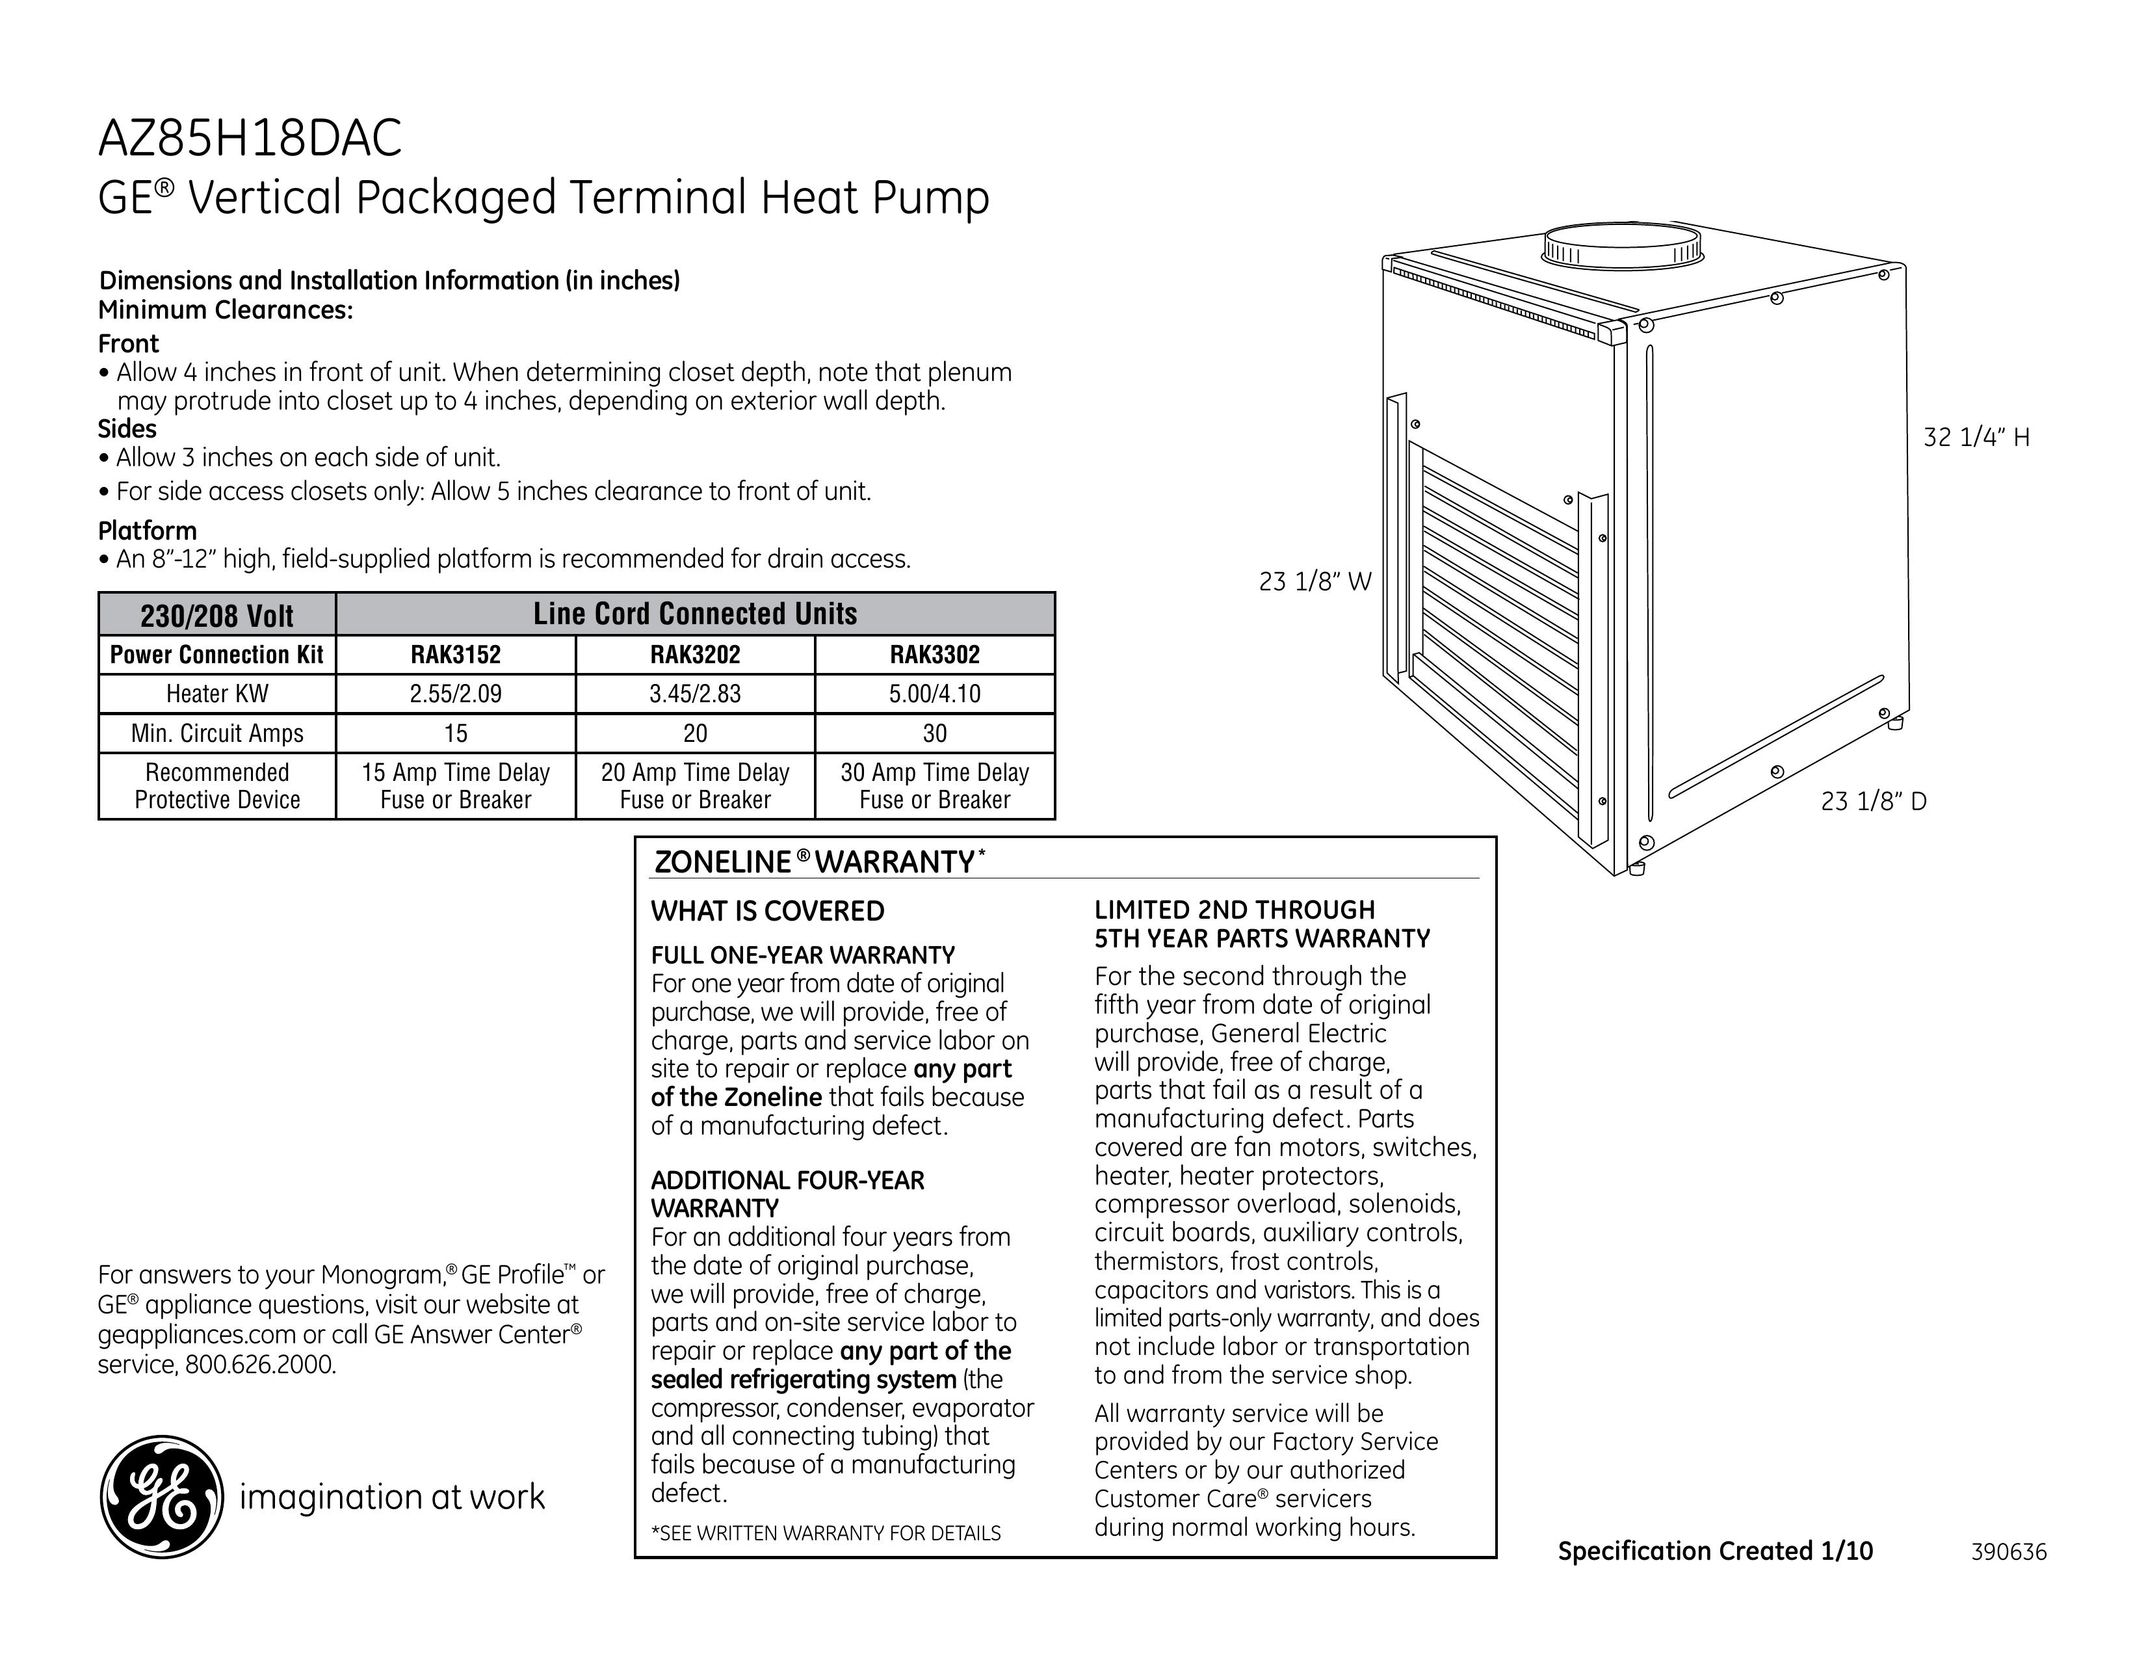 GE AZ85H18DAC Heat Pump User Manual